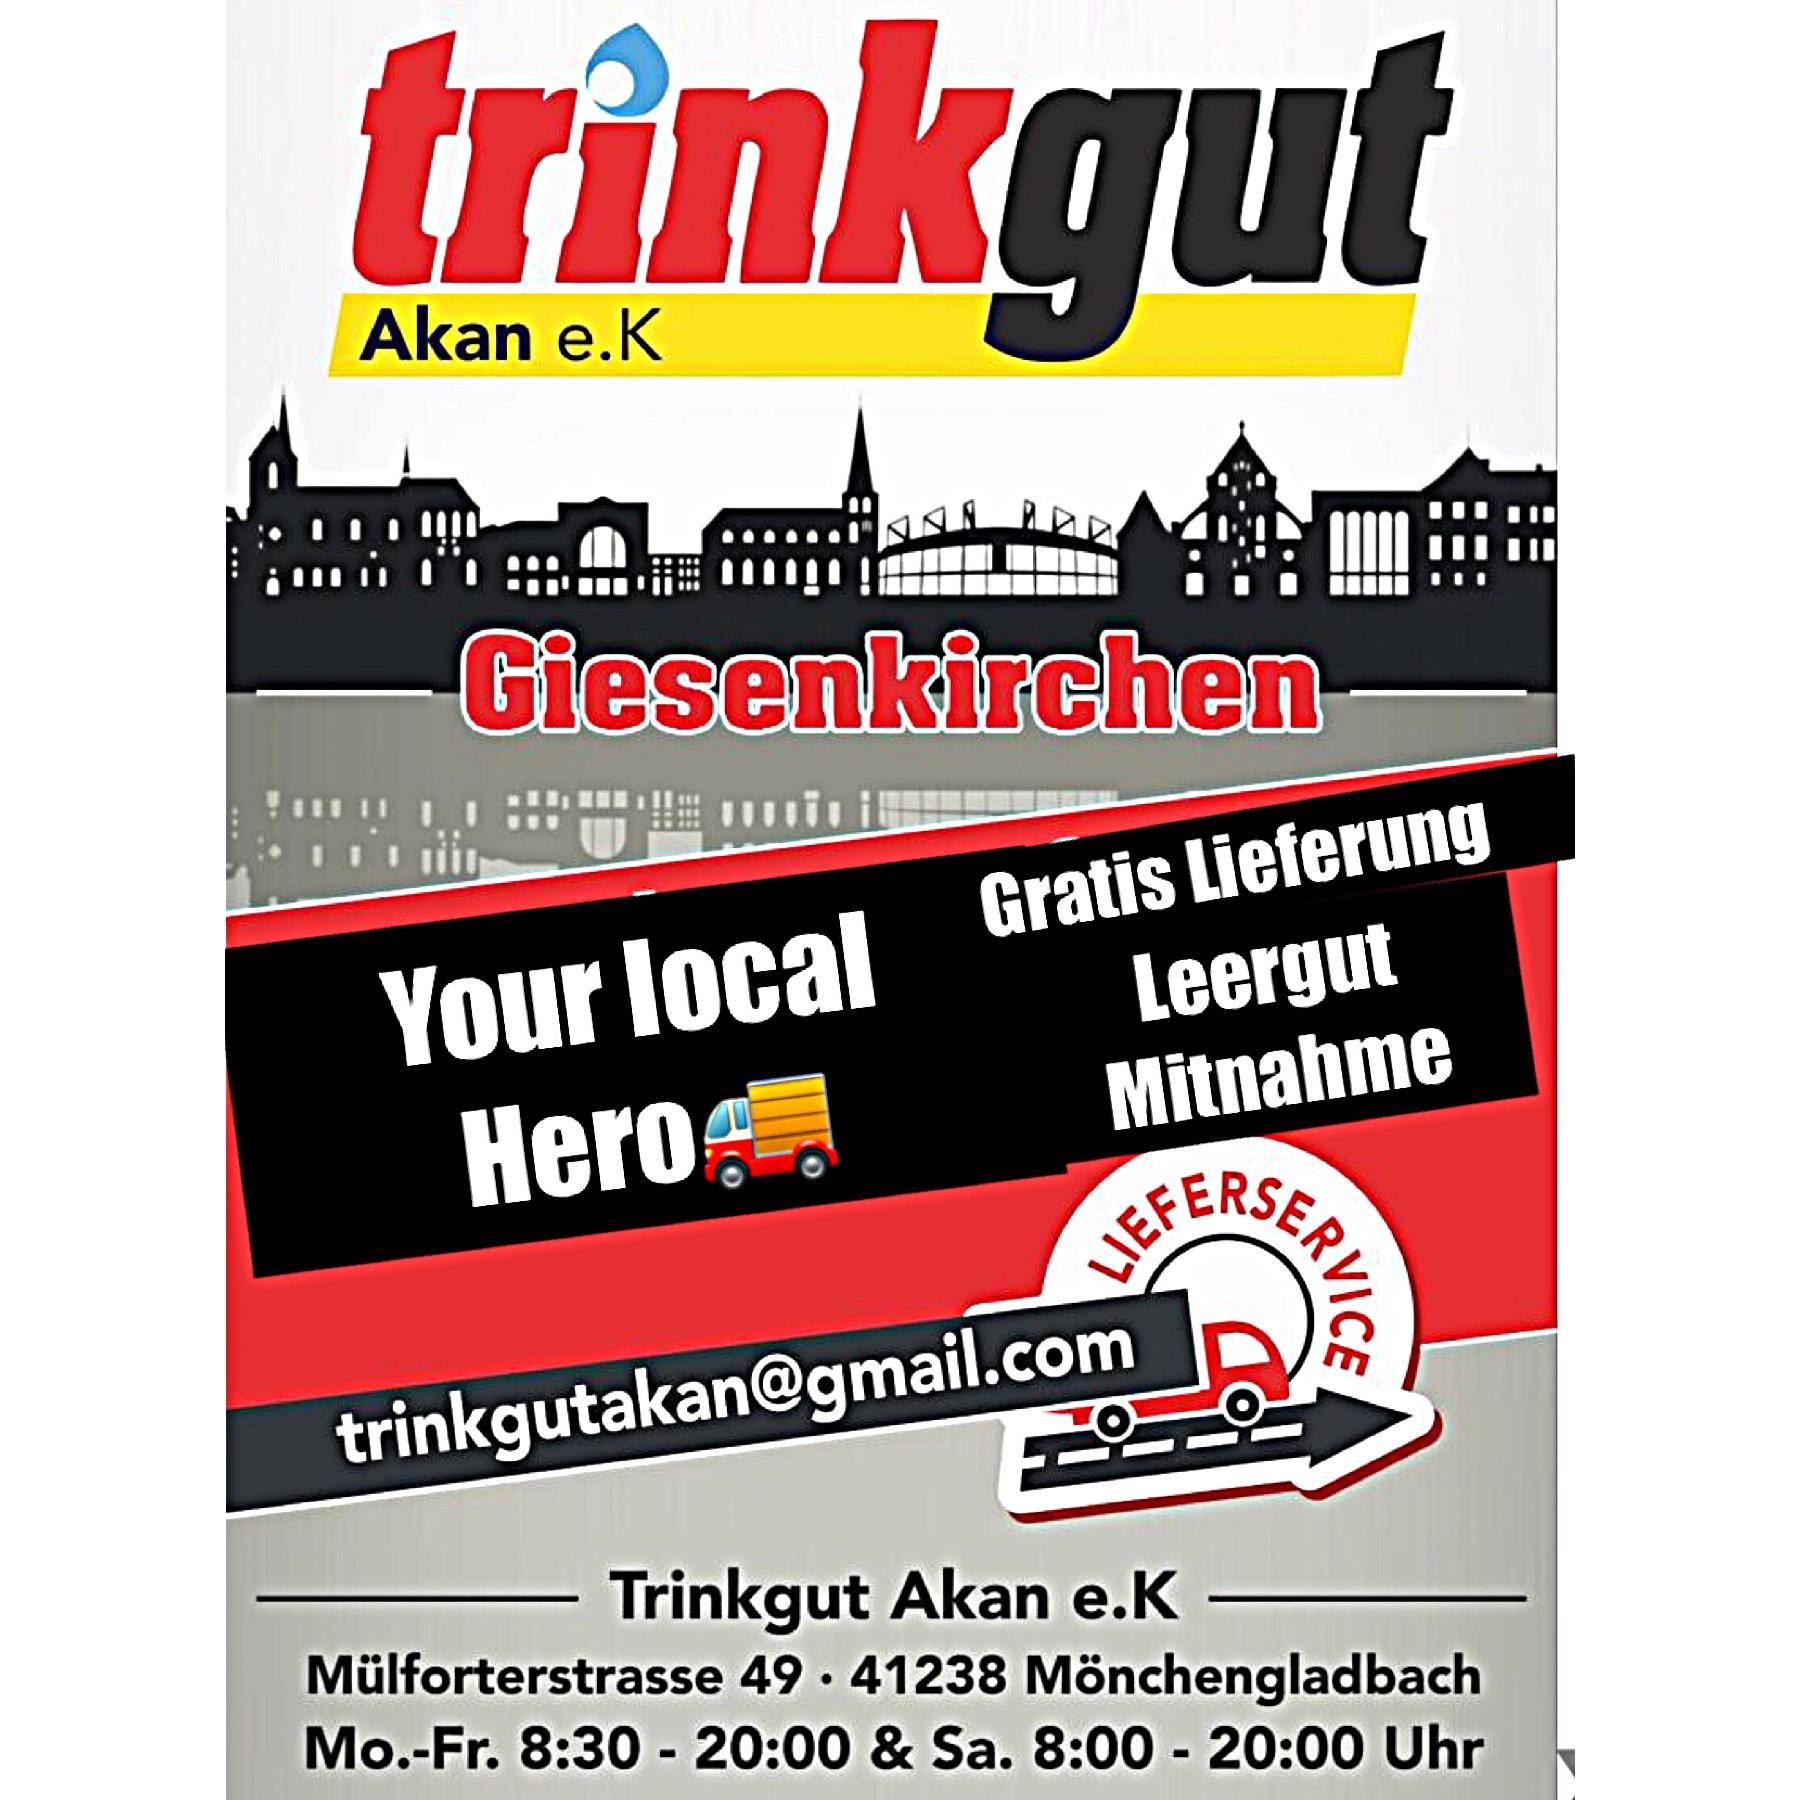 Trinkgut Akan e.K in Mönchengladbach - Logo